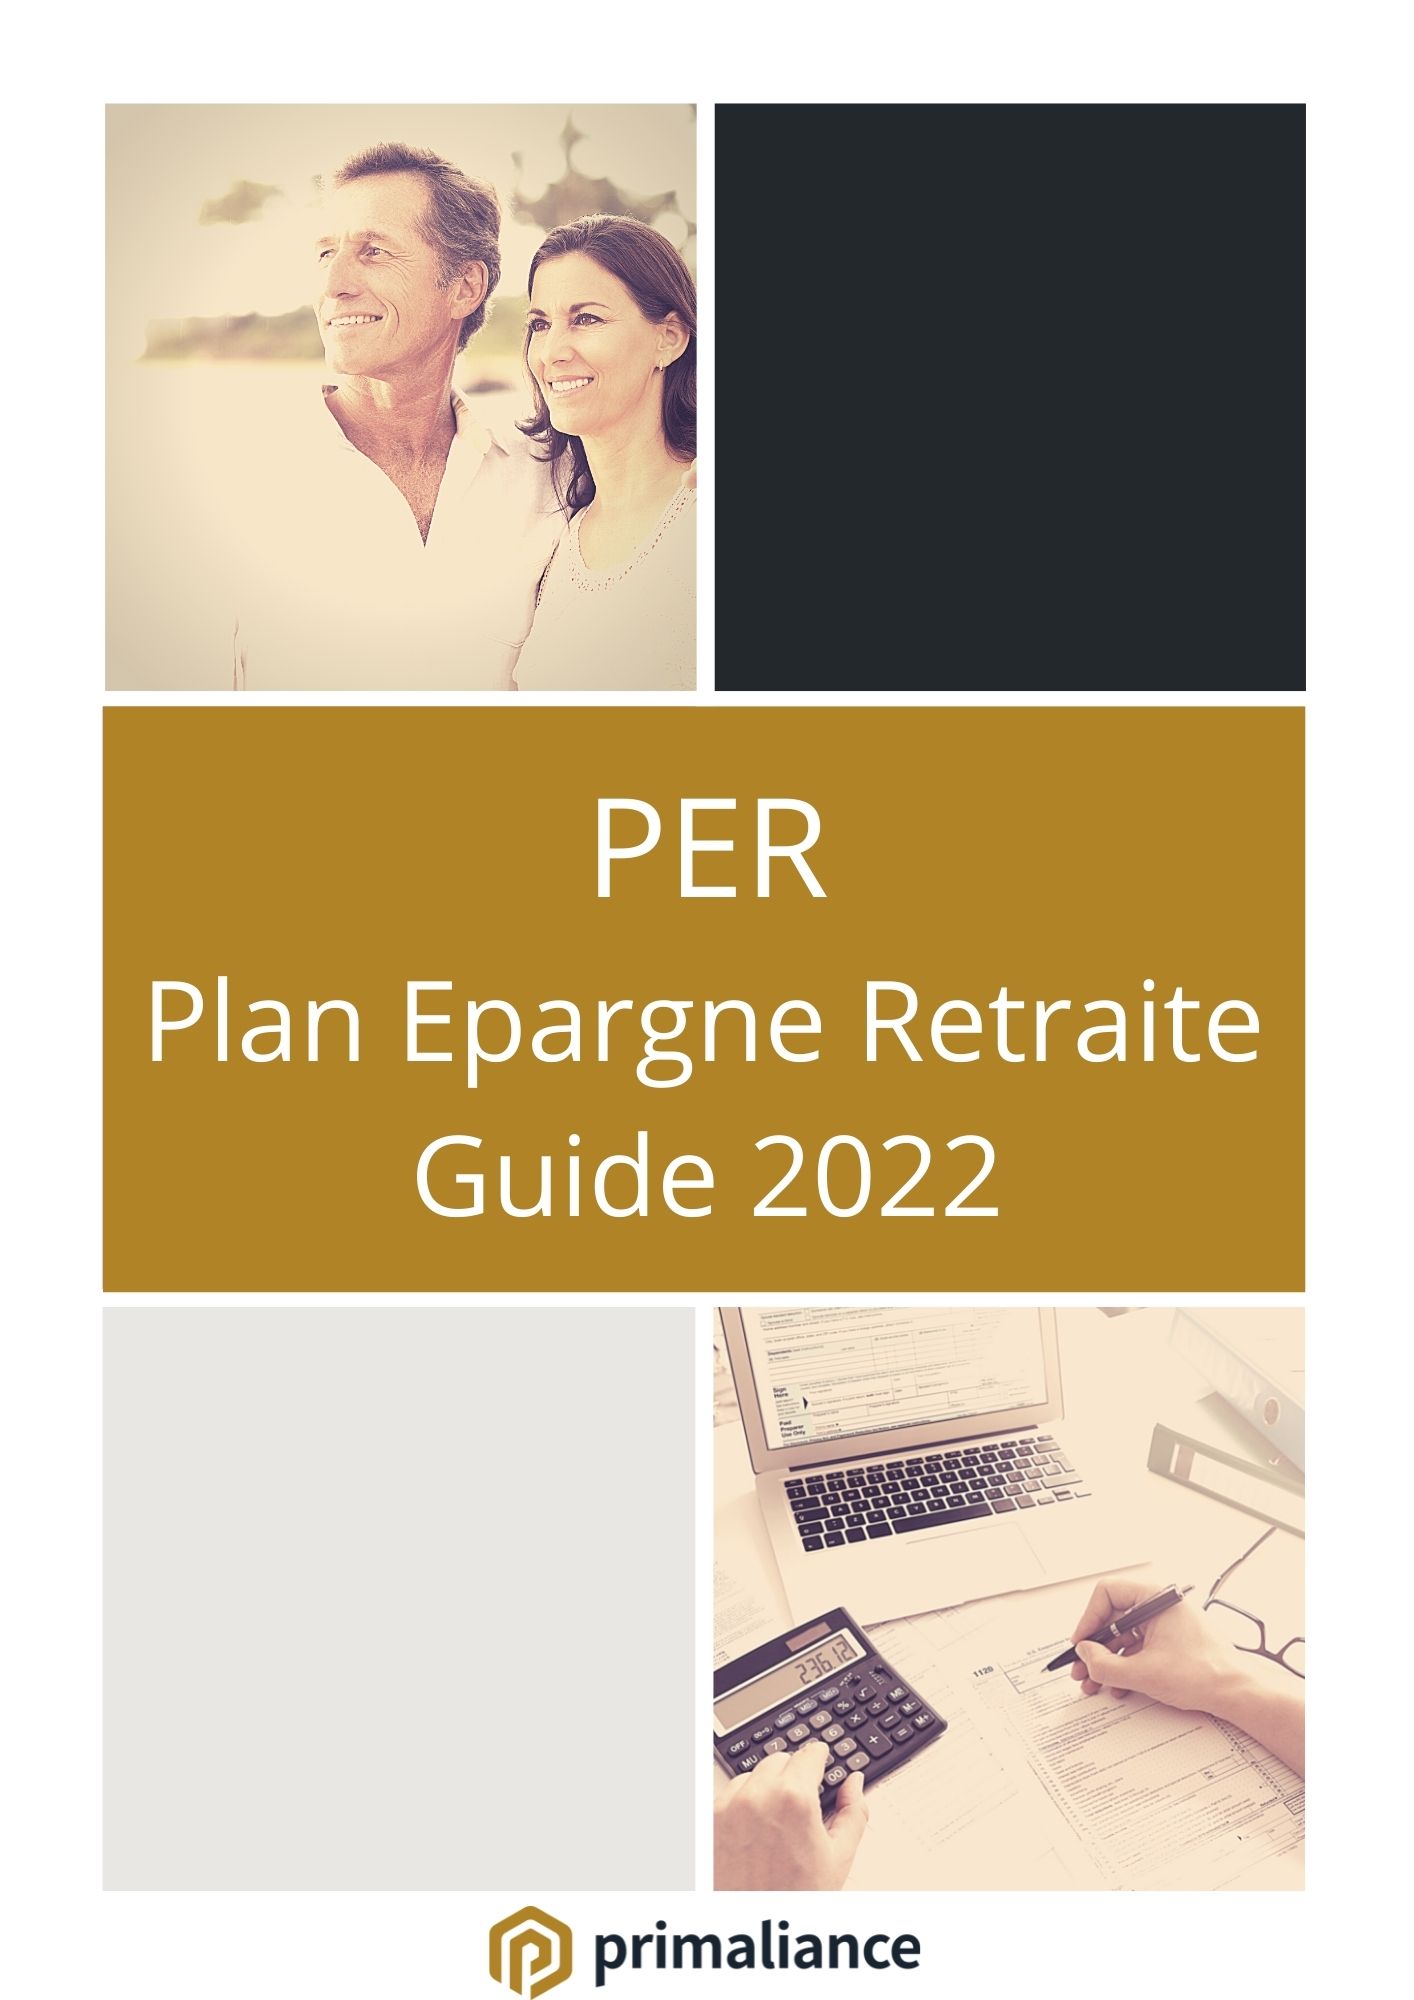 per guide 2022 primaliance telecharger